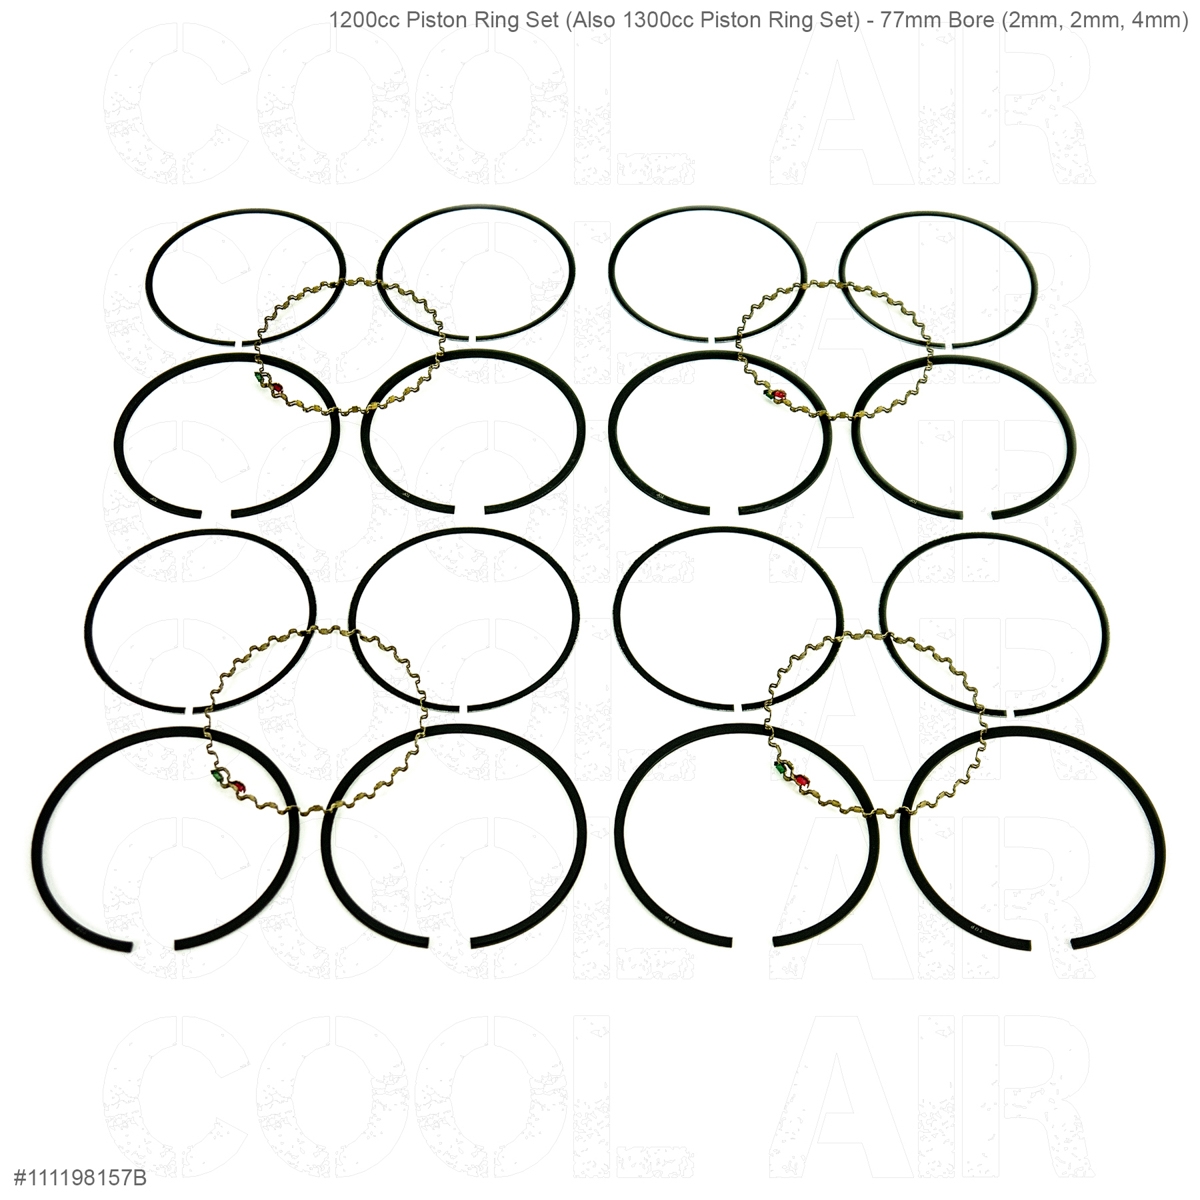 1200cc Piston Ring Set (Also 1300cc Piston Ring Set) - 77mm Bore (2mm, 2mm, 4mm)